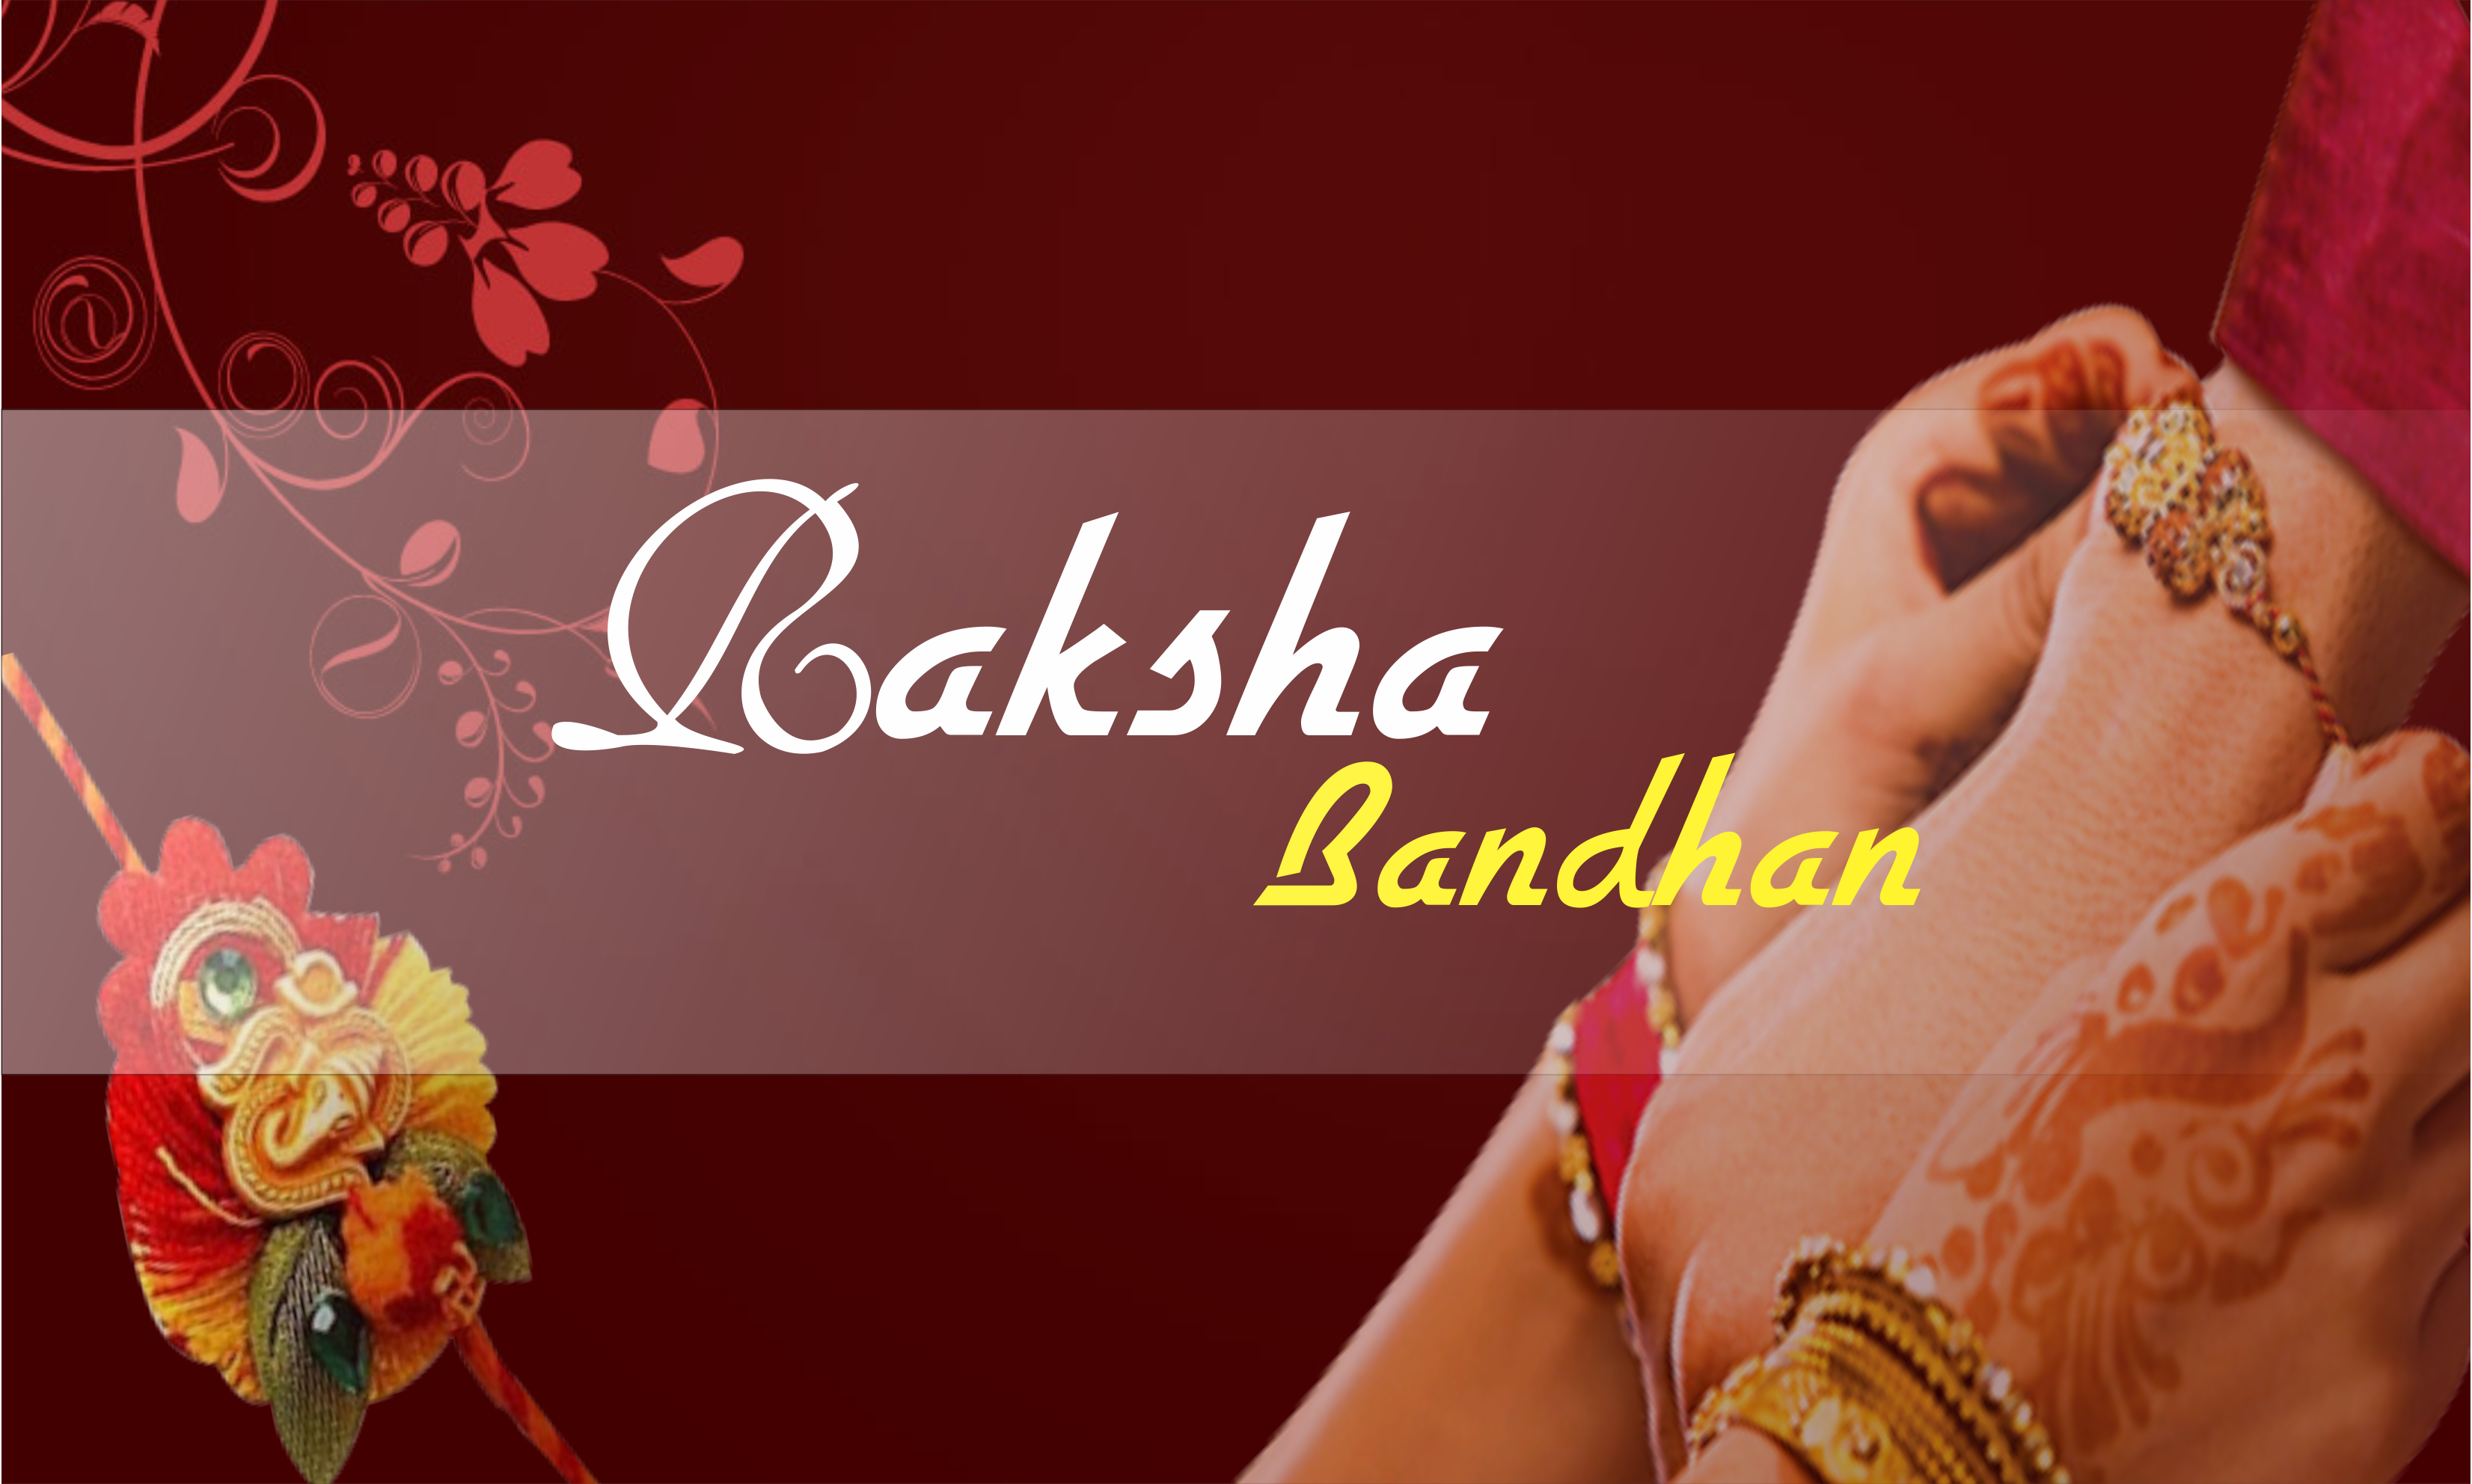 Download 2016 raksha bandhan wallpaper - Raksha bandhan wallpapers for your  mobile cell phone